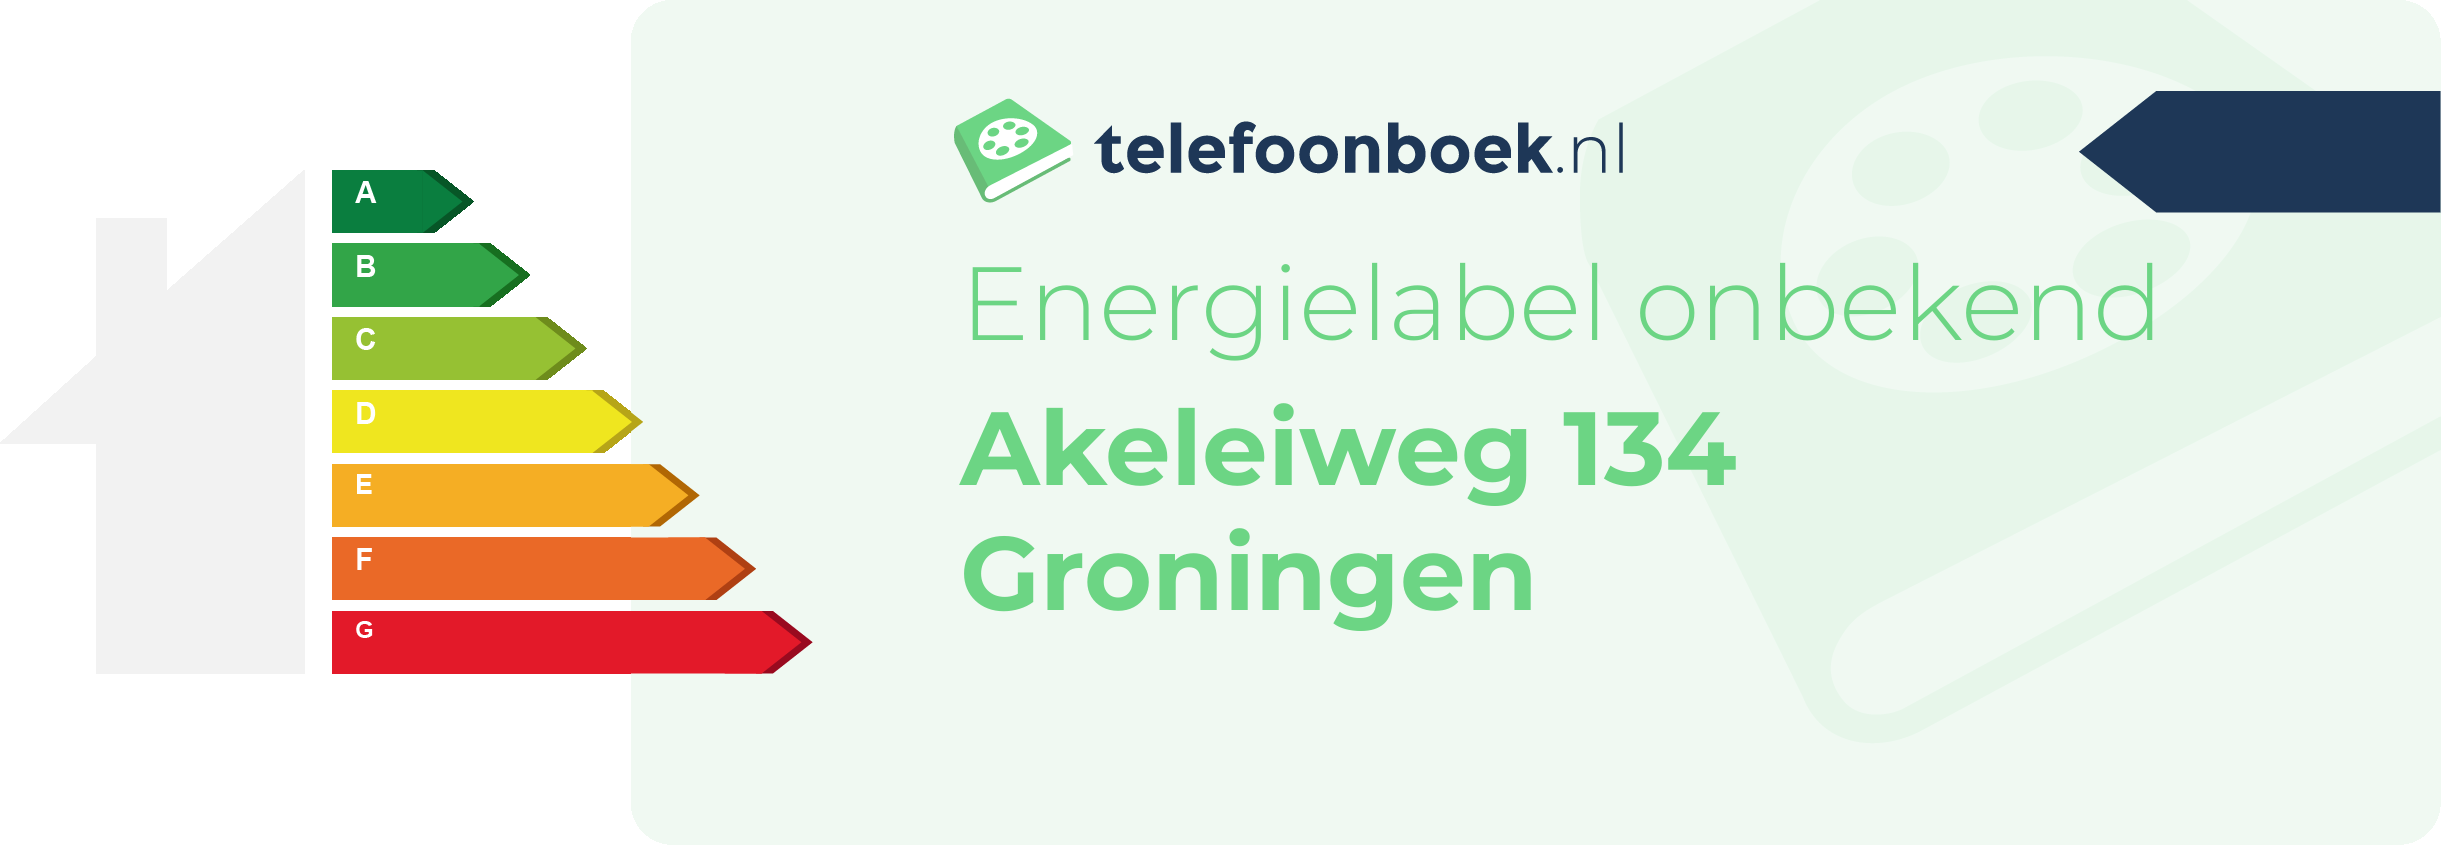 Energielabel Akeleiweg 134 Groningen